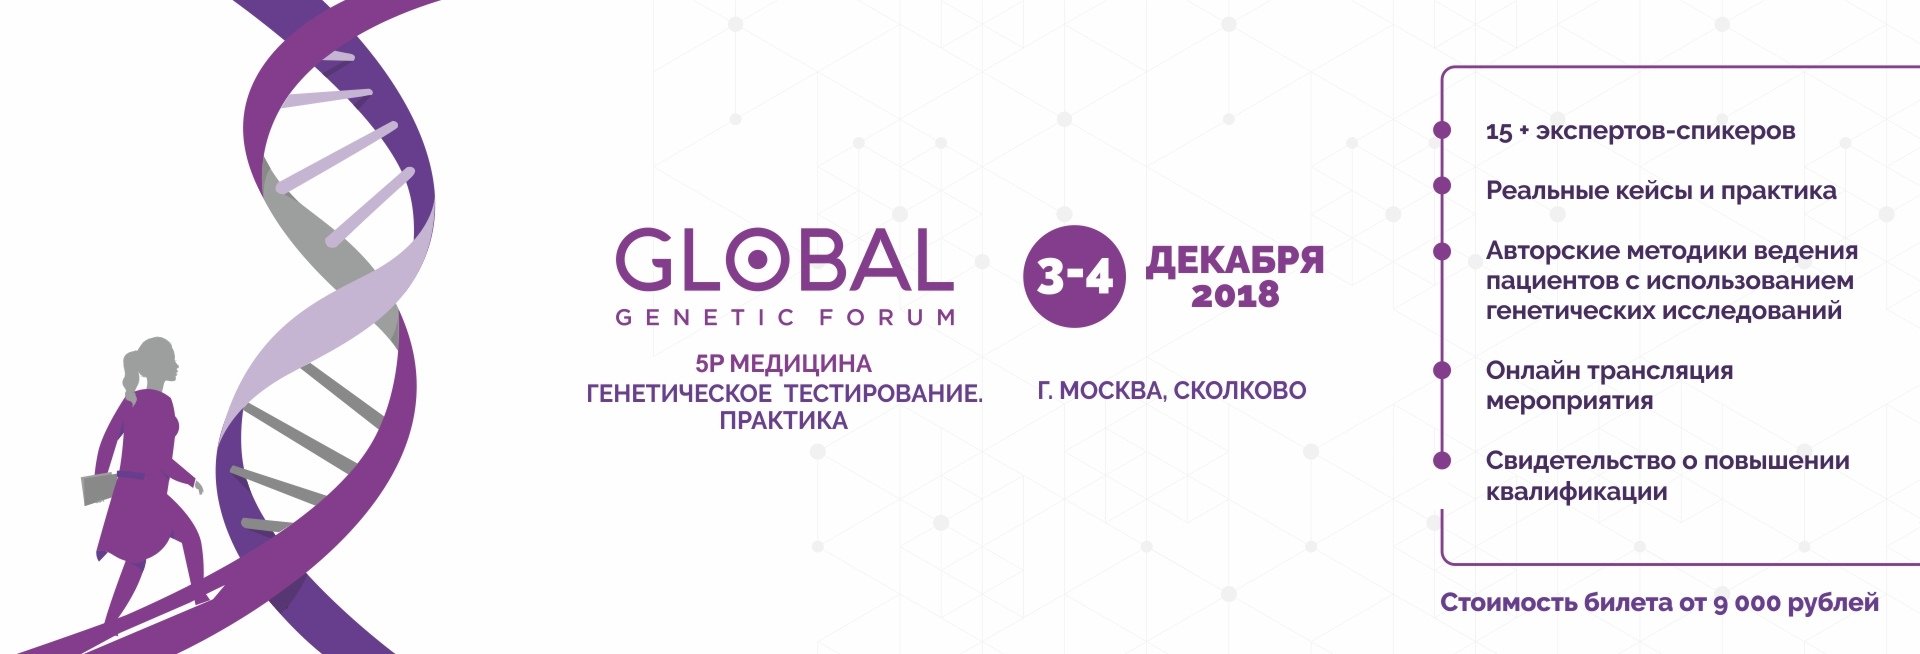 Global Genetic Forum